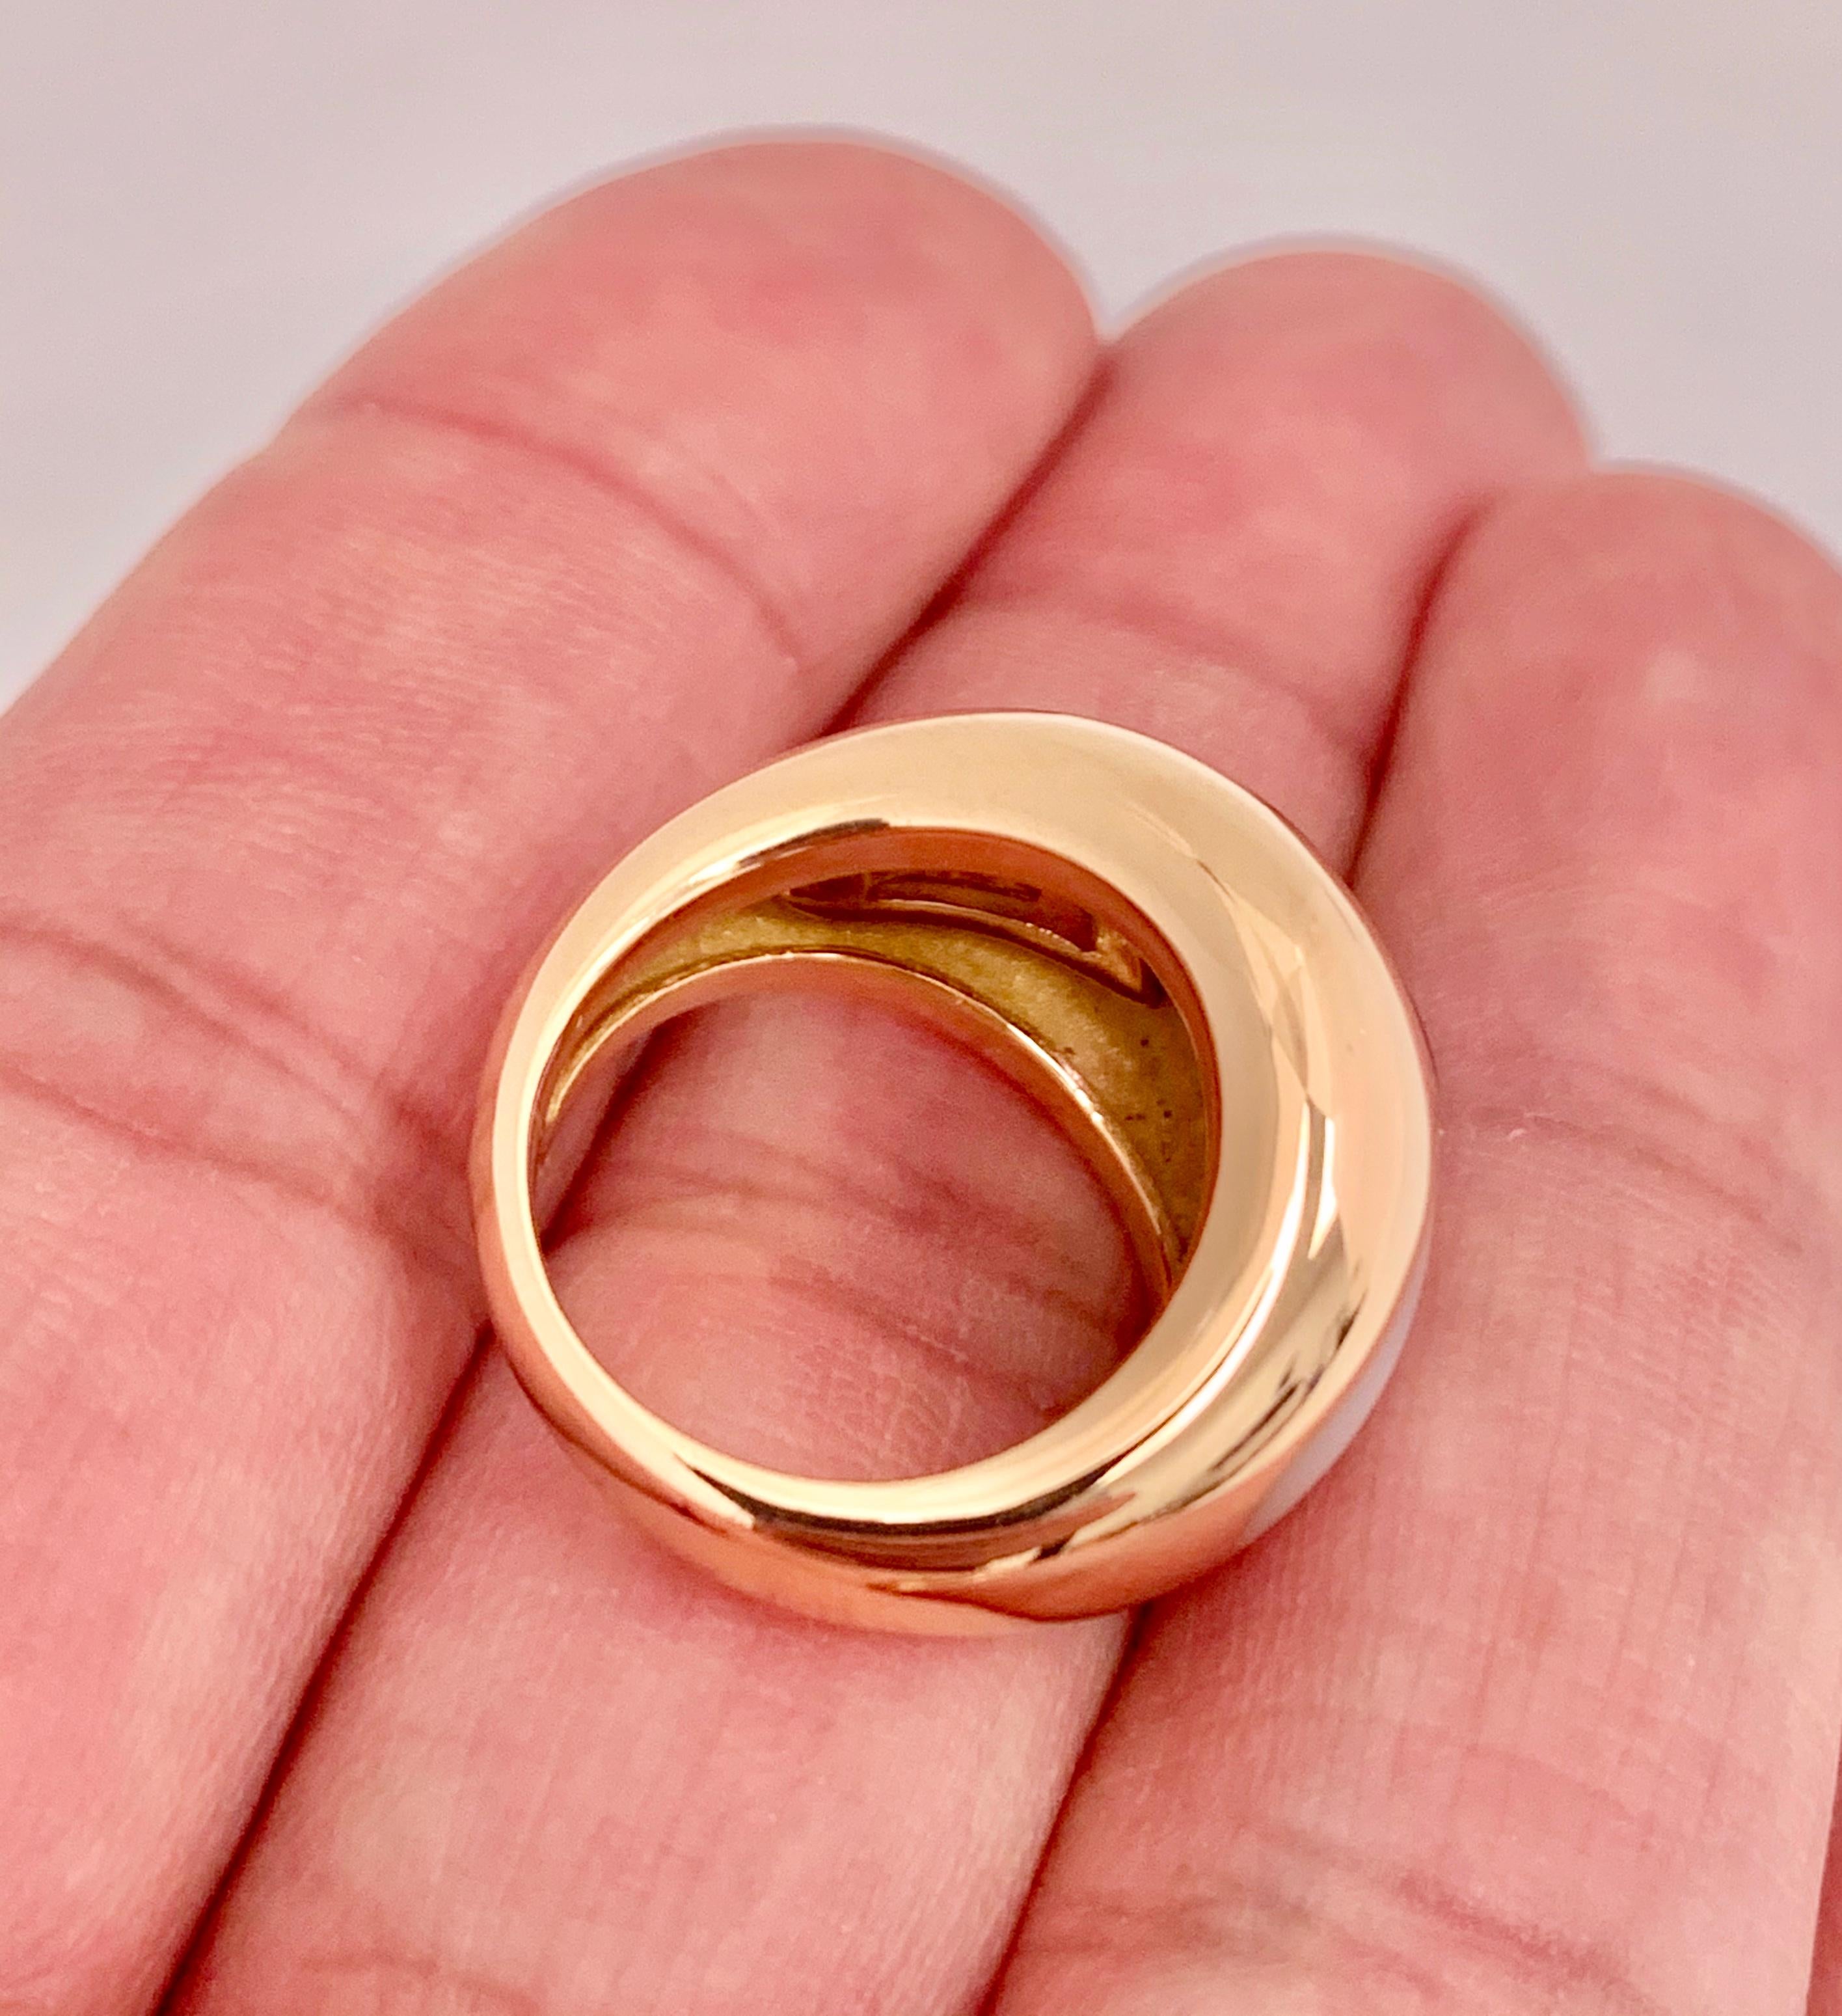 gold ring design for mother